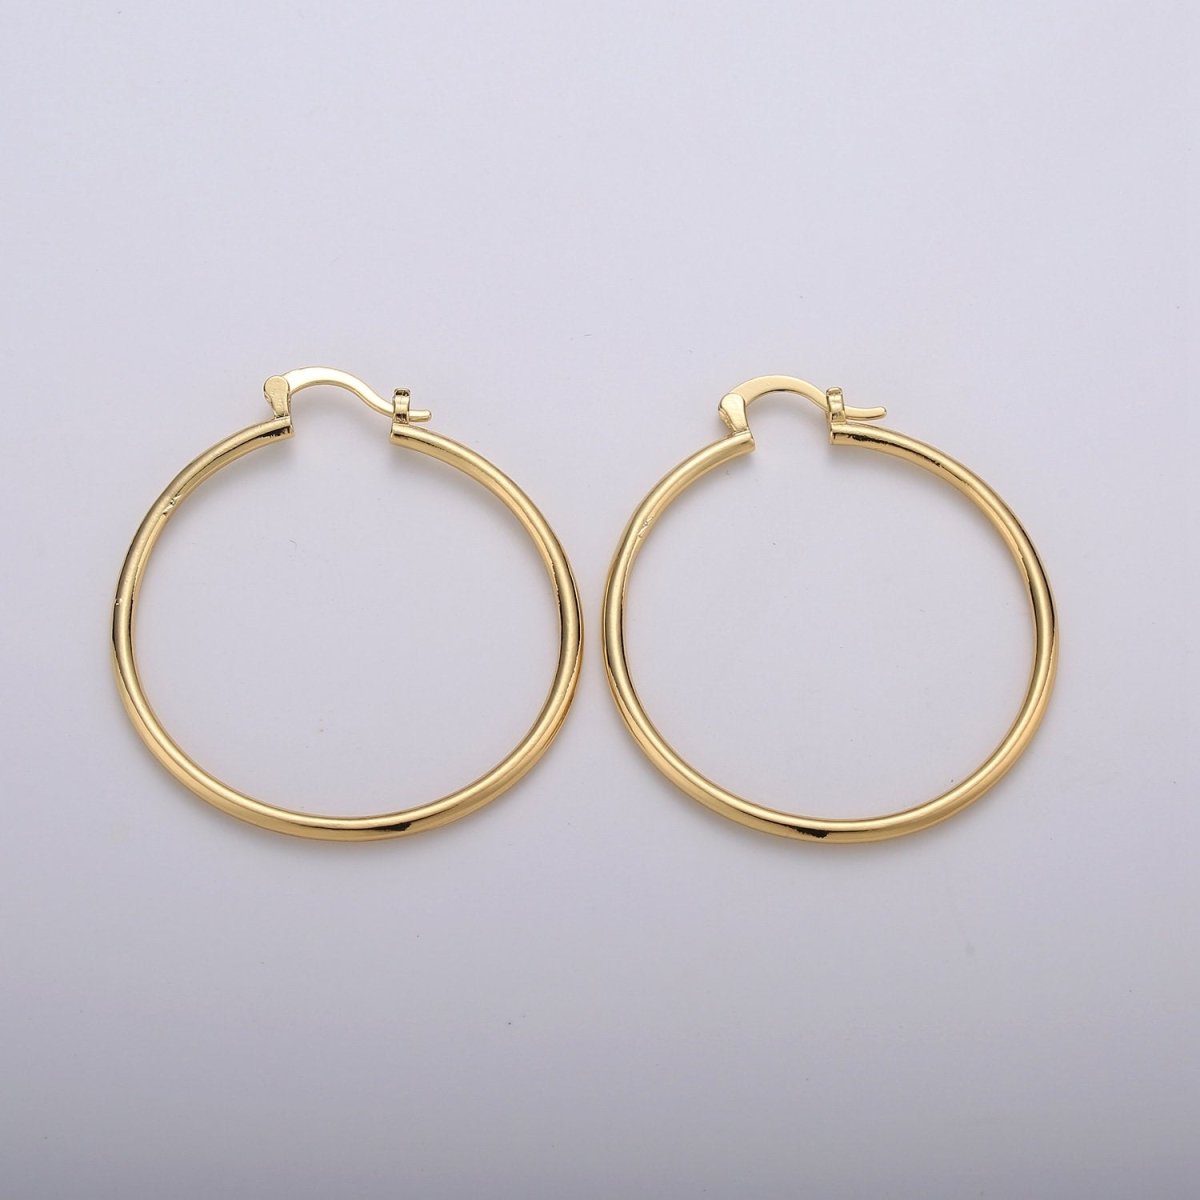 Classic Hoops Gold, 40mm Gold Hoops, Large Gold Hoop Earrings, Hollow Hoop Earrings, Chunky Hoops, Light Hoops for Every Day Wear Q-230 - DLUXCA